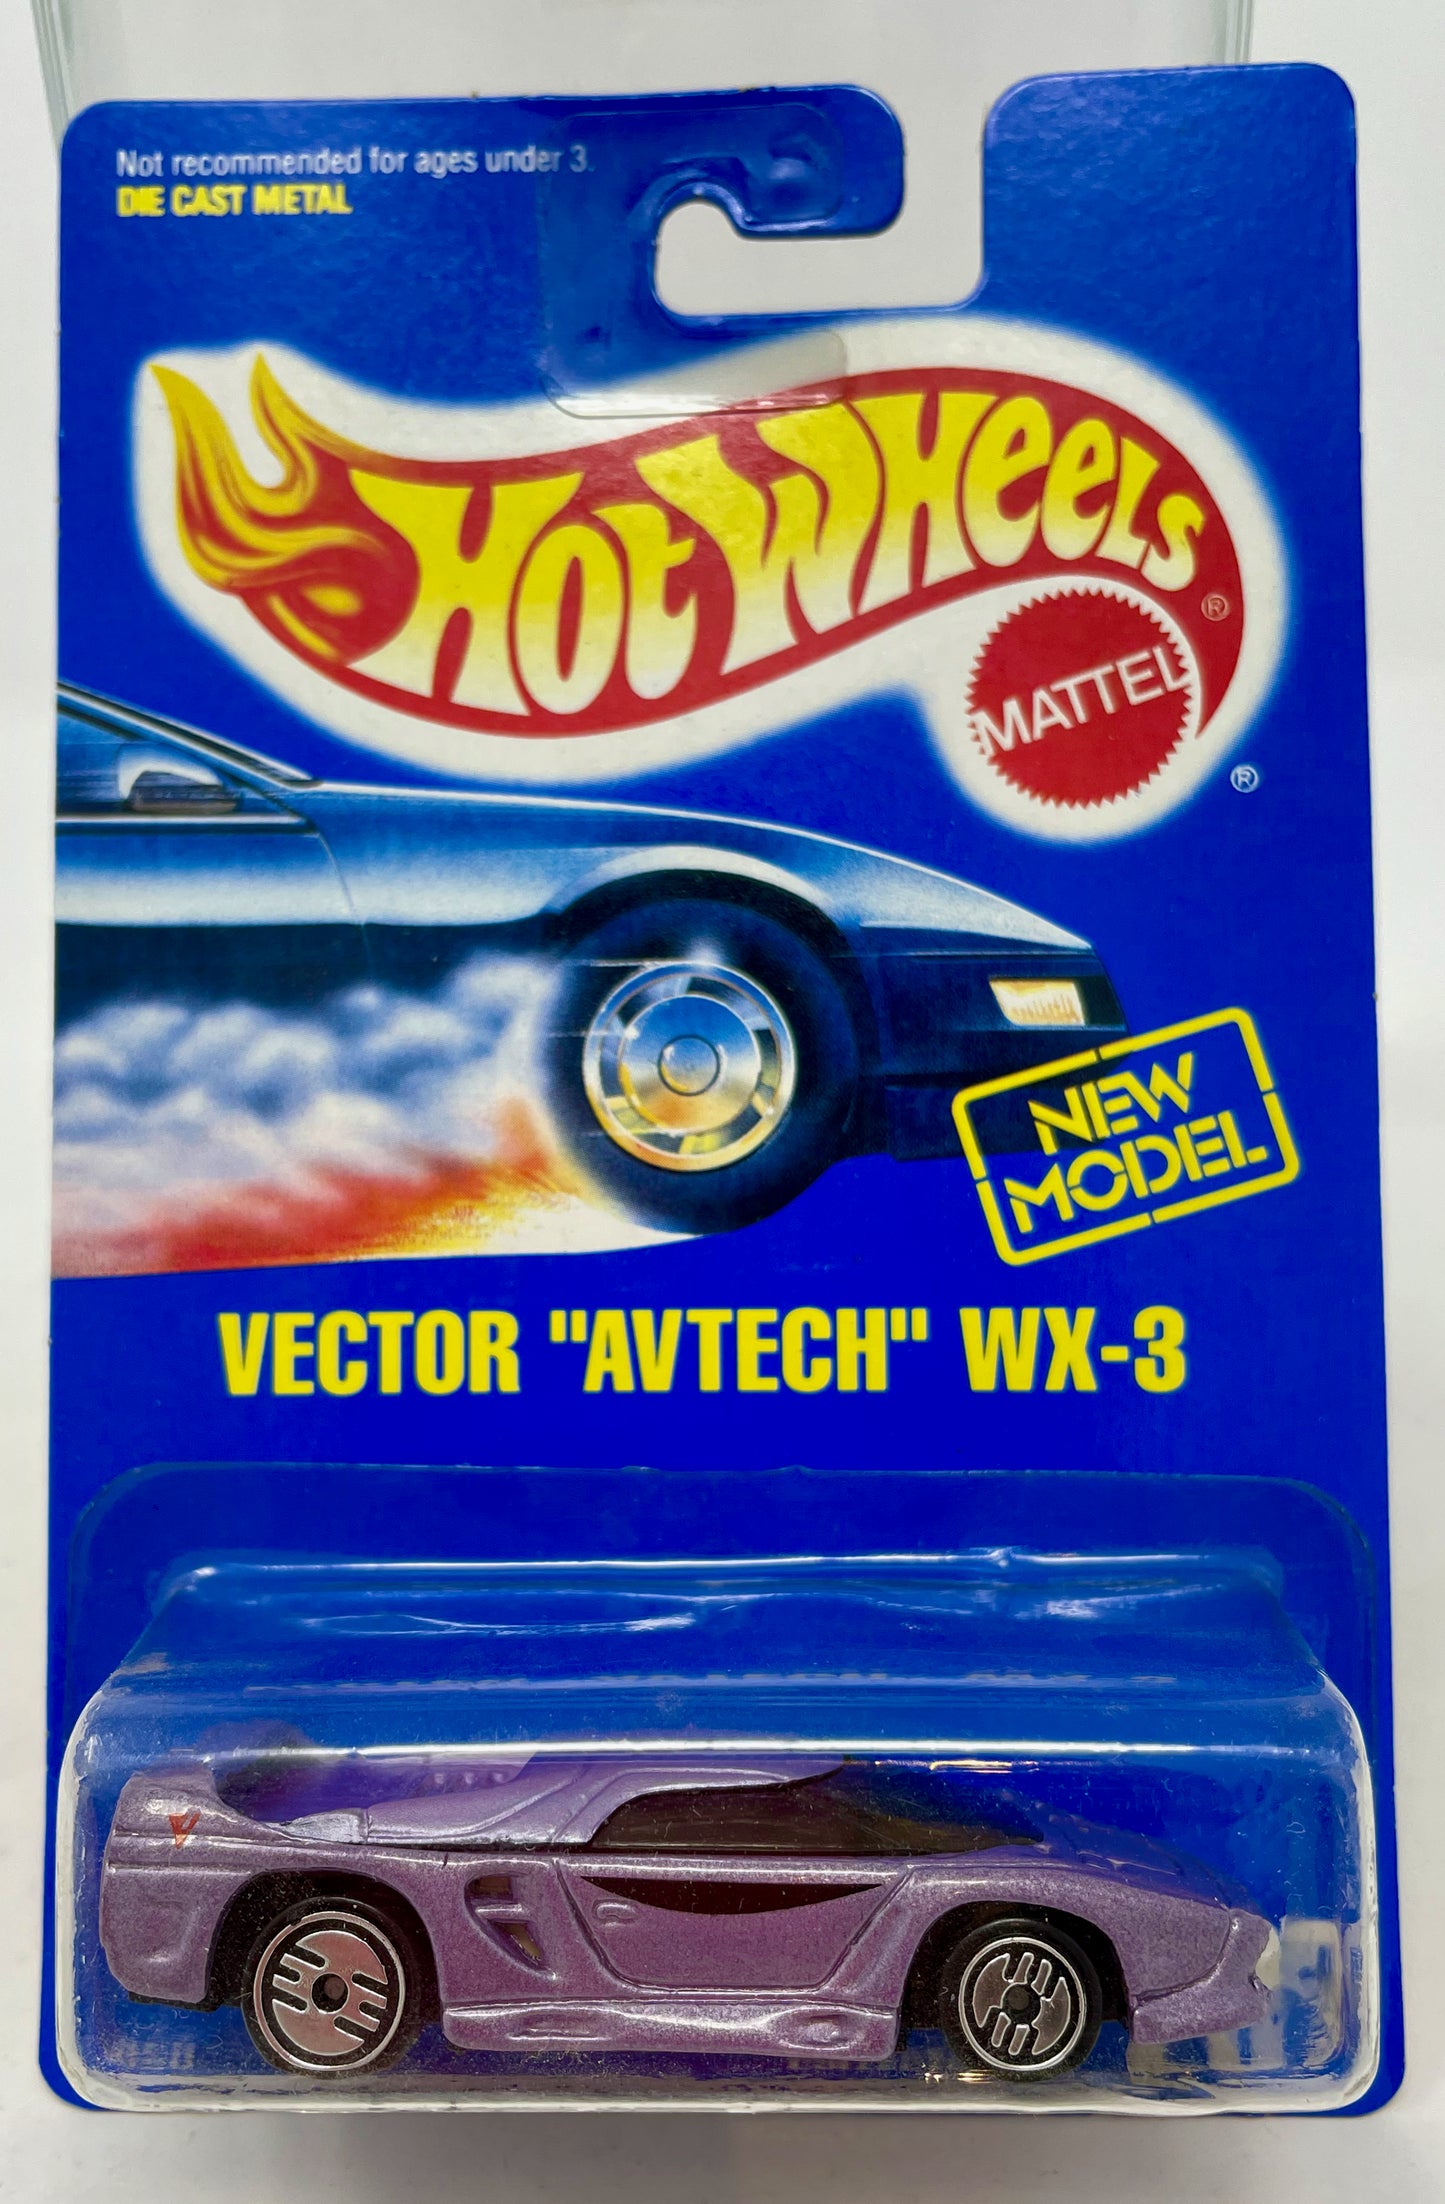 HOT WHEELS - VECTOR "AVTECH" WX-3 - COLLECTOR NO. 207 - 1991 MATTEL